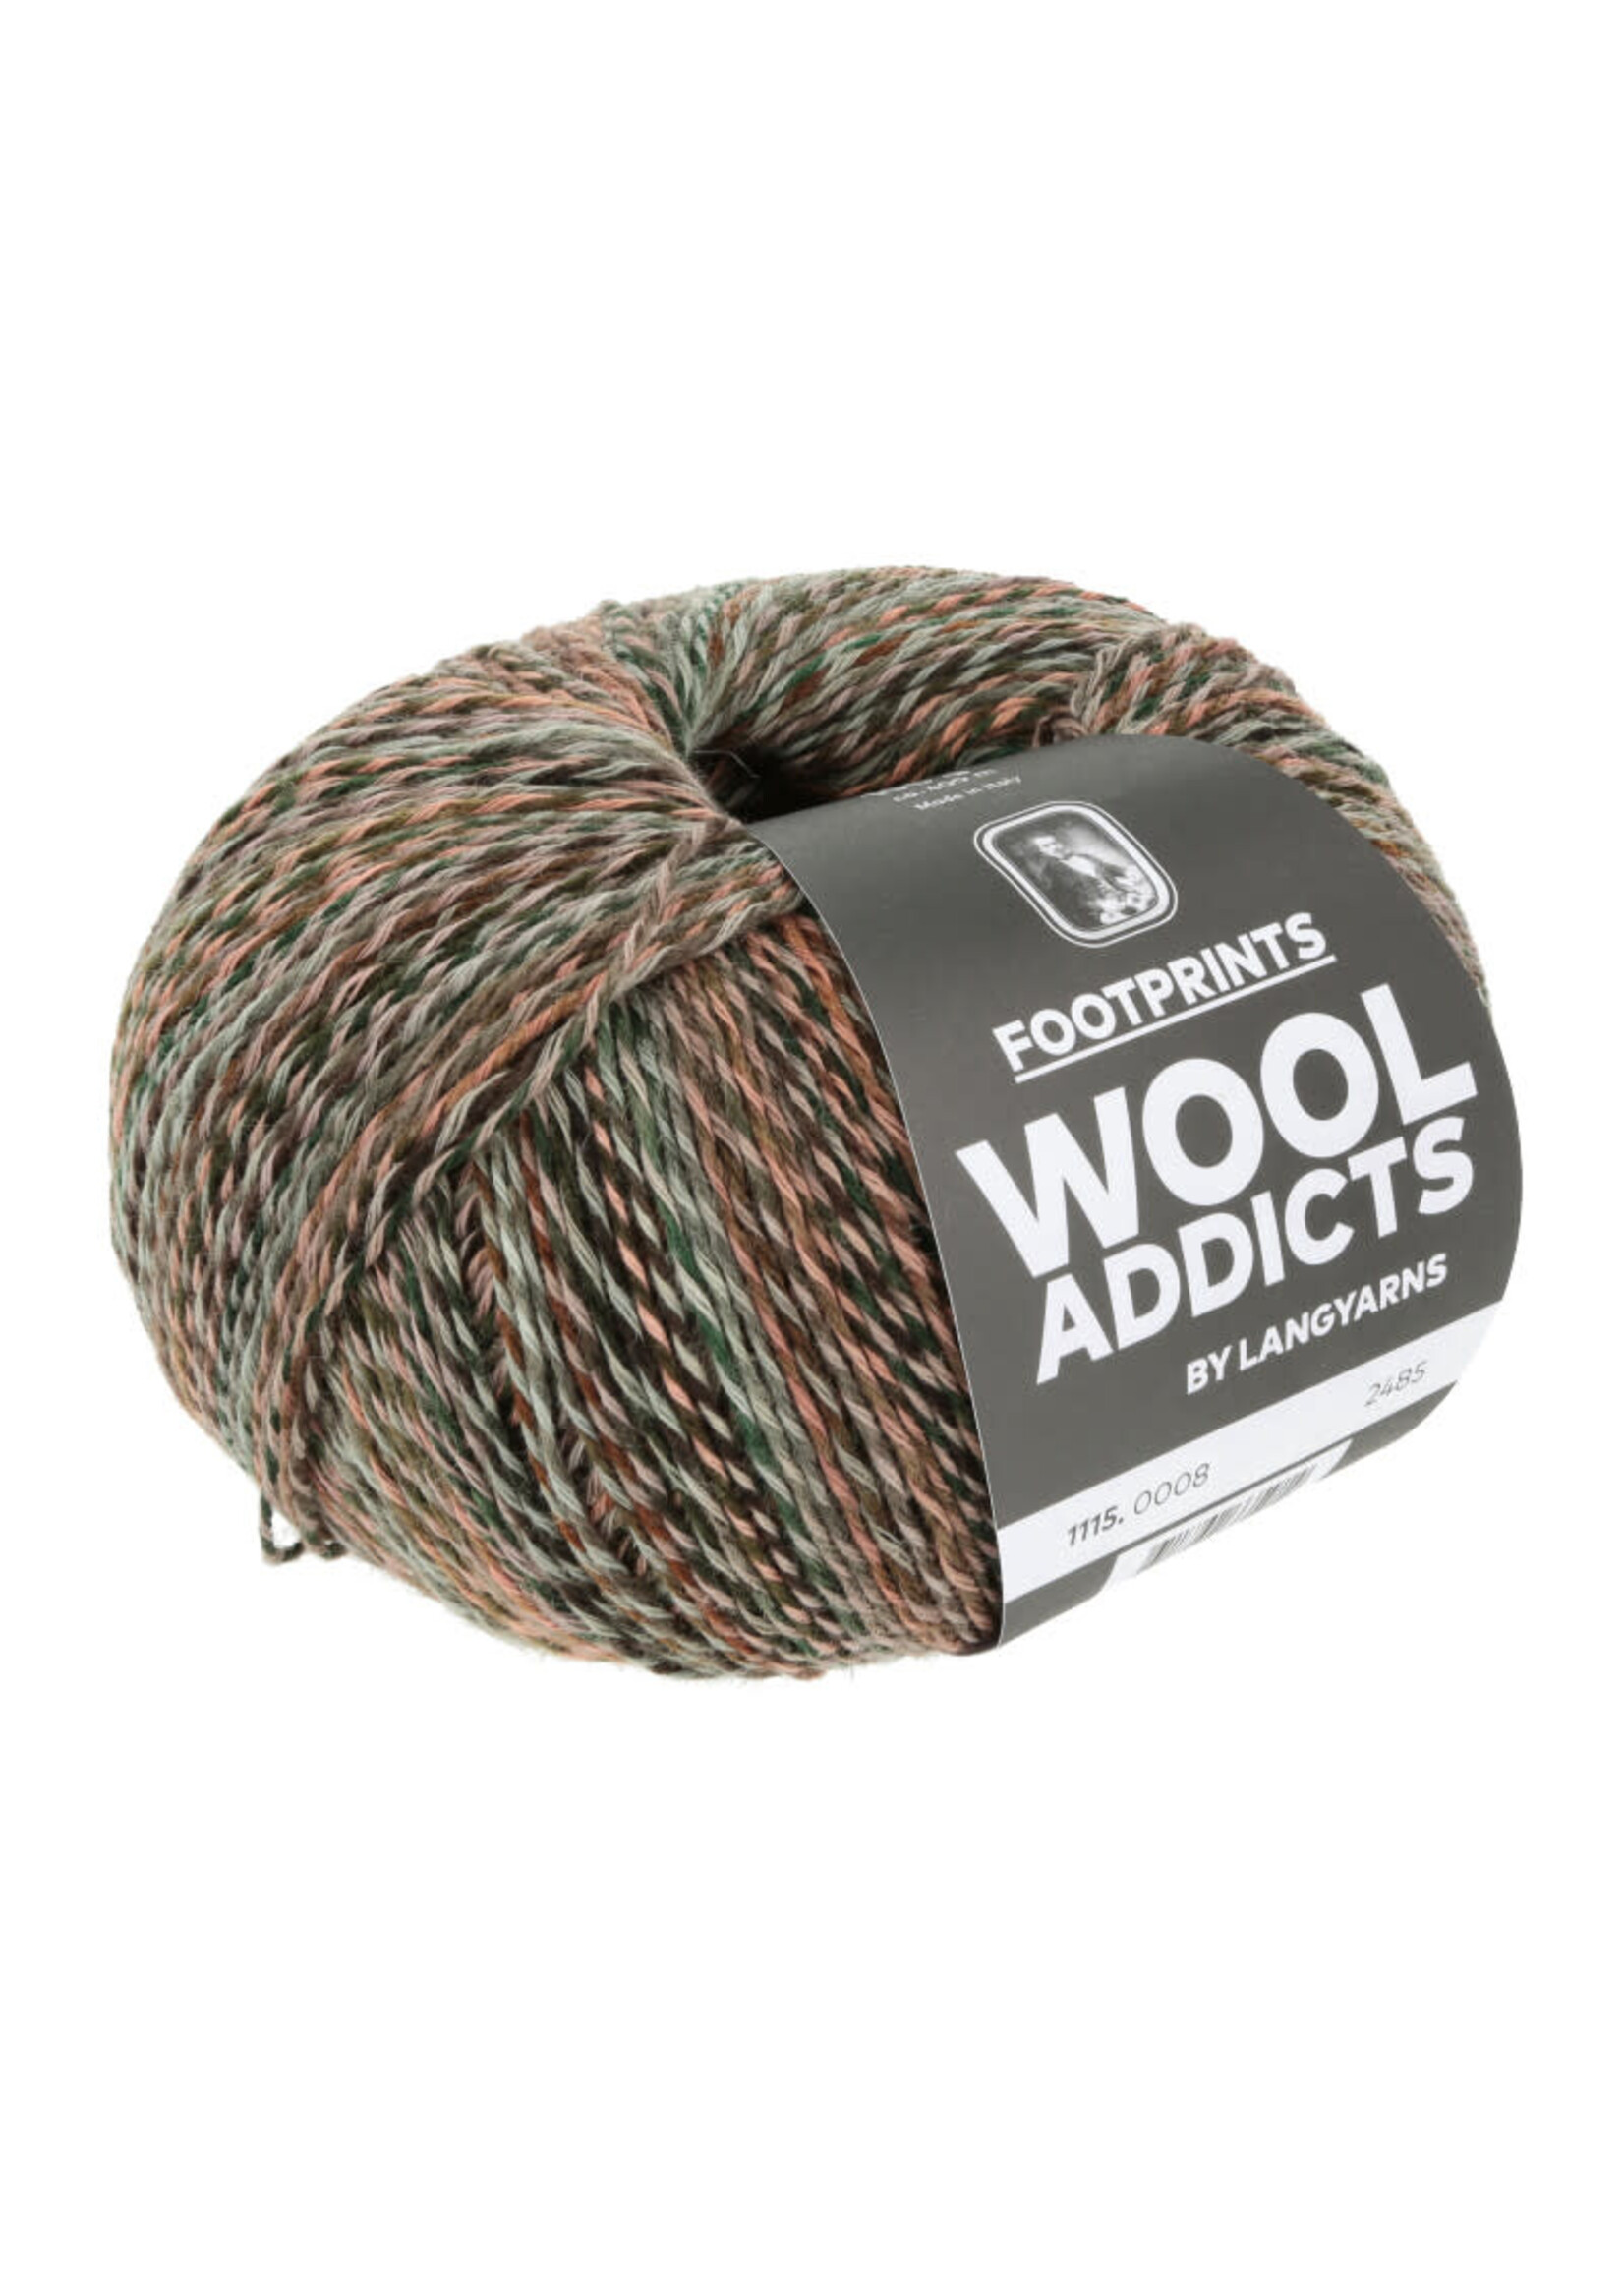 WoolAddicts Footprints - 0008 Oranje/groen/bruin